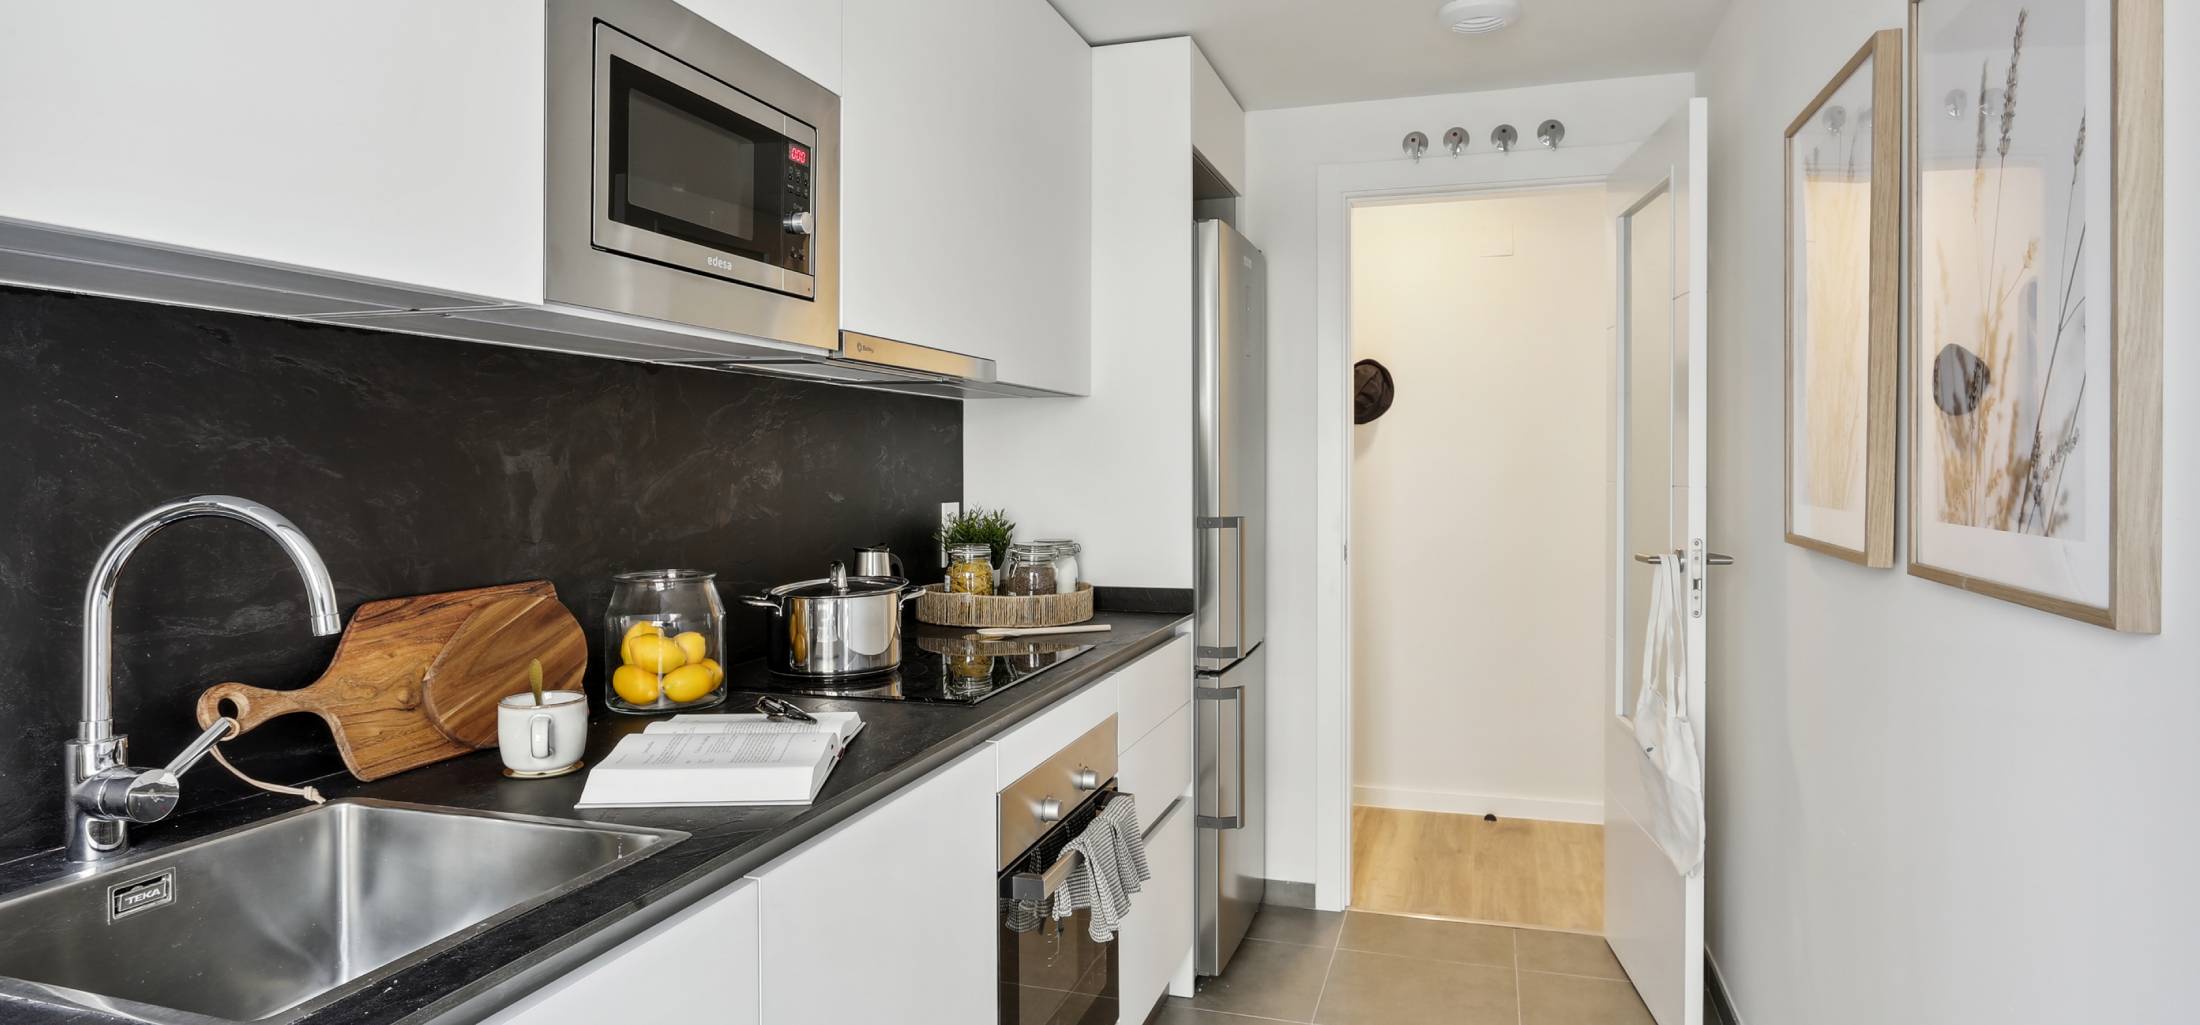 Kitchen of apartment for rent | Bialto | Badalona